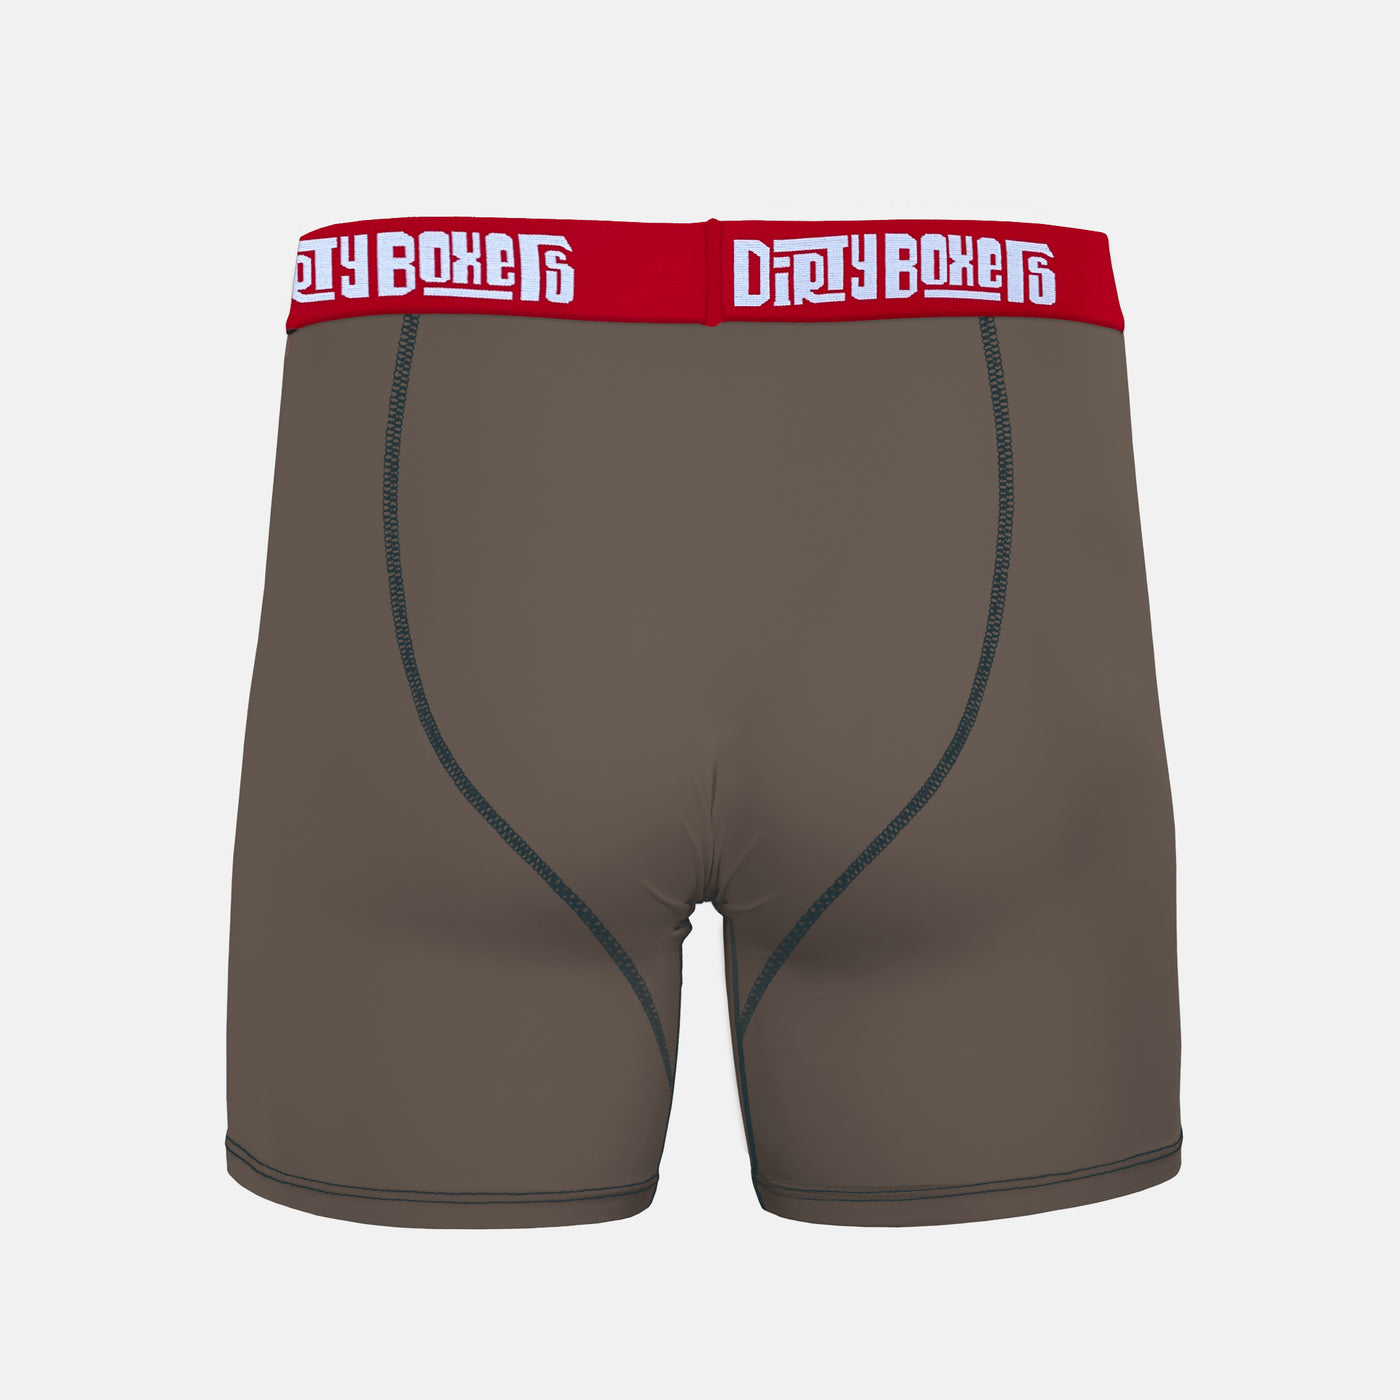 Soldier Dirty Boxers Men's Underwear